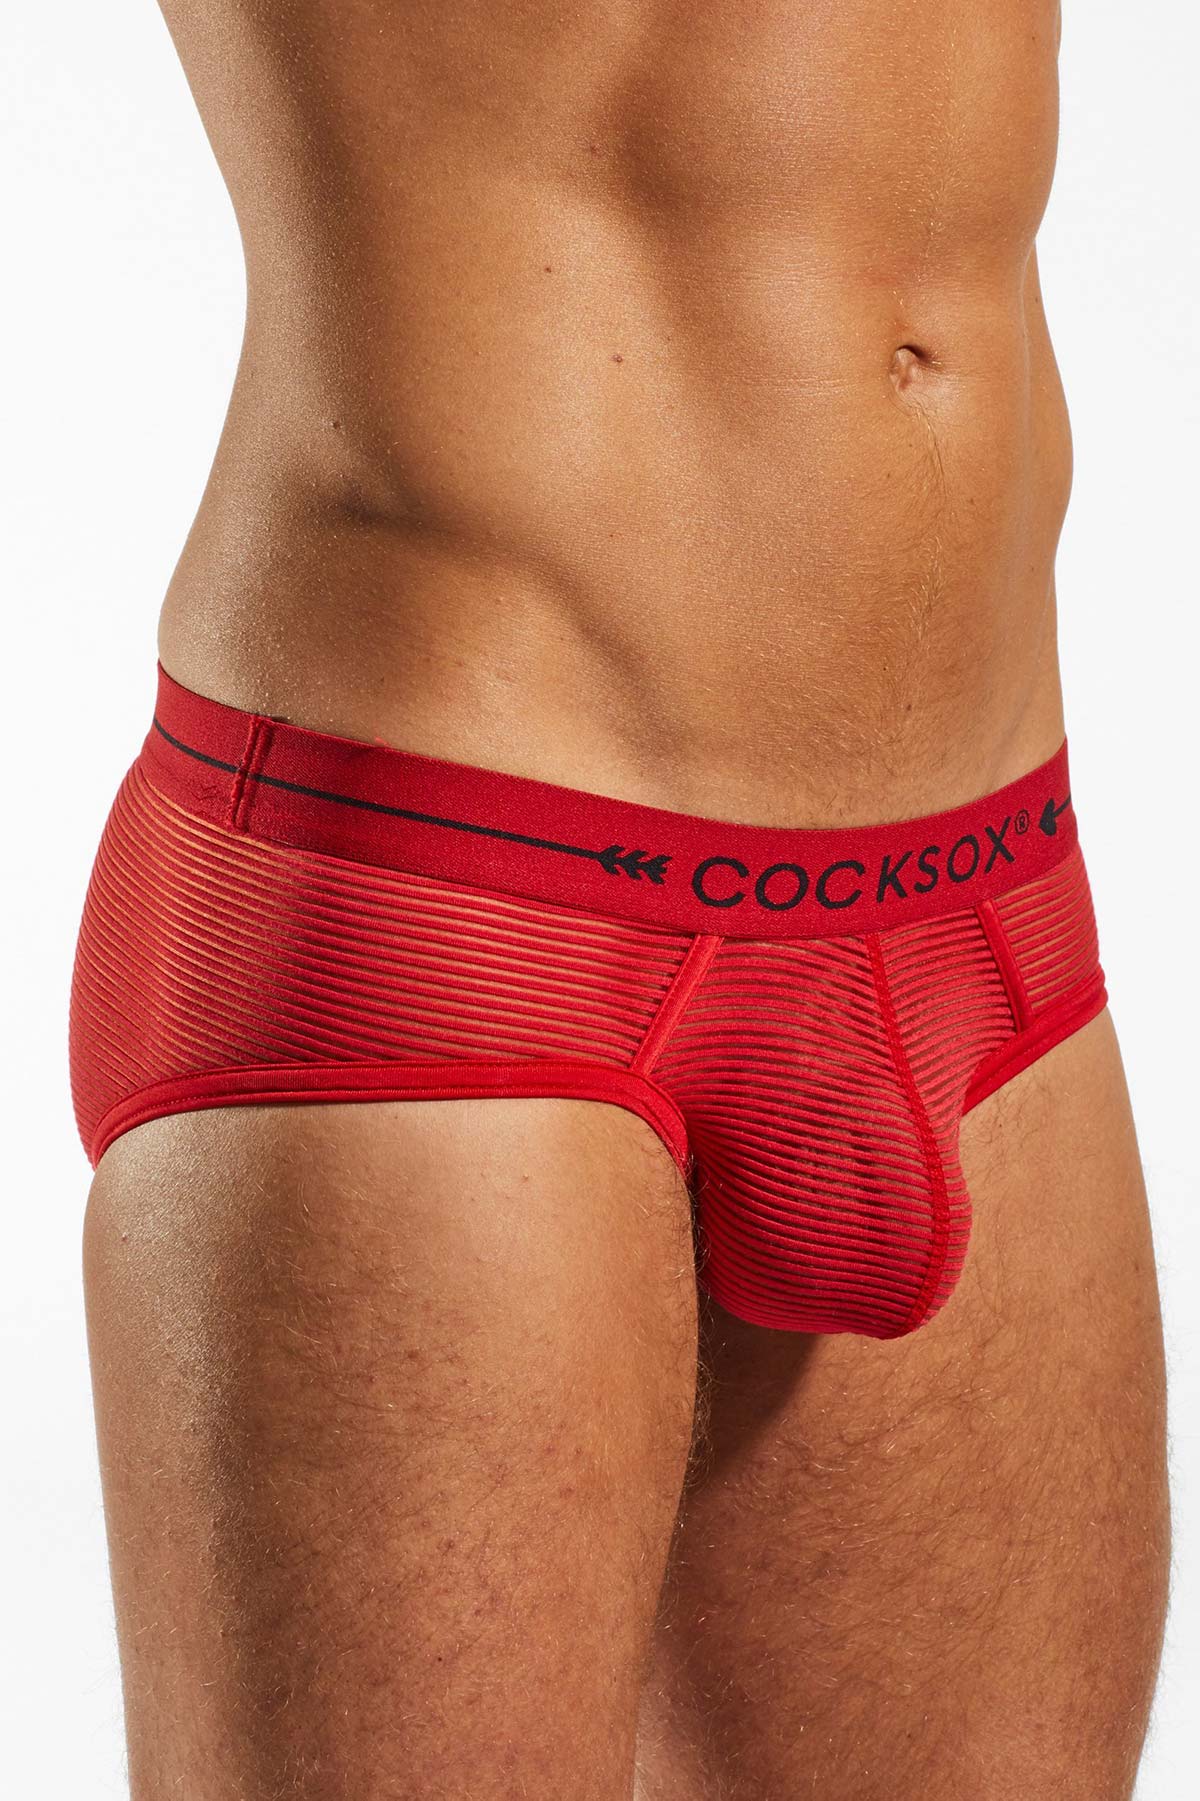 COCKSOX Underwear and Swimwear